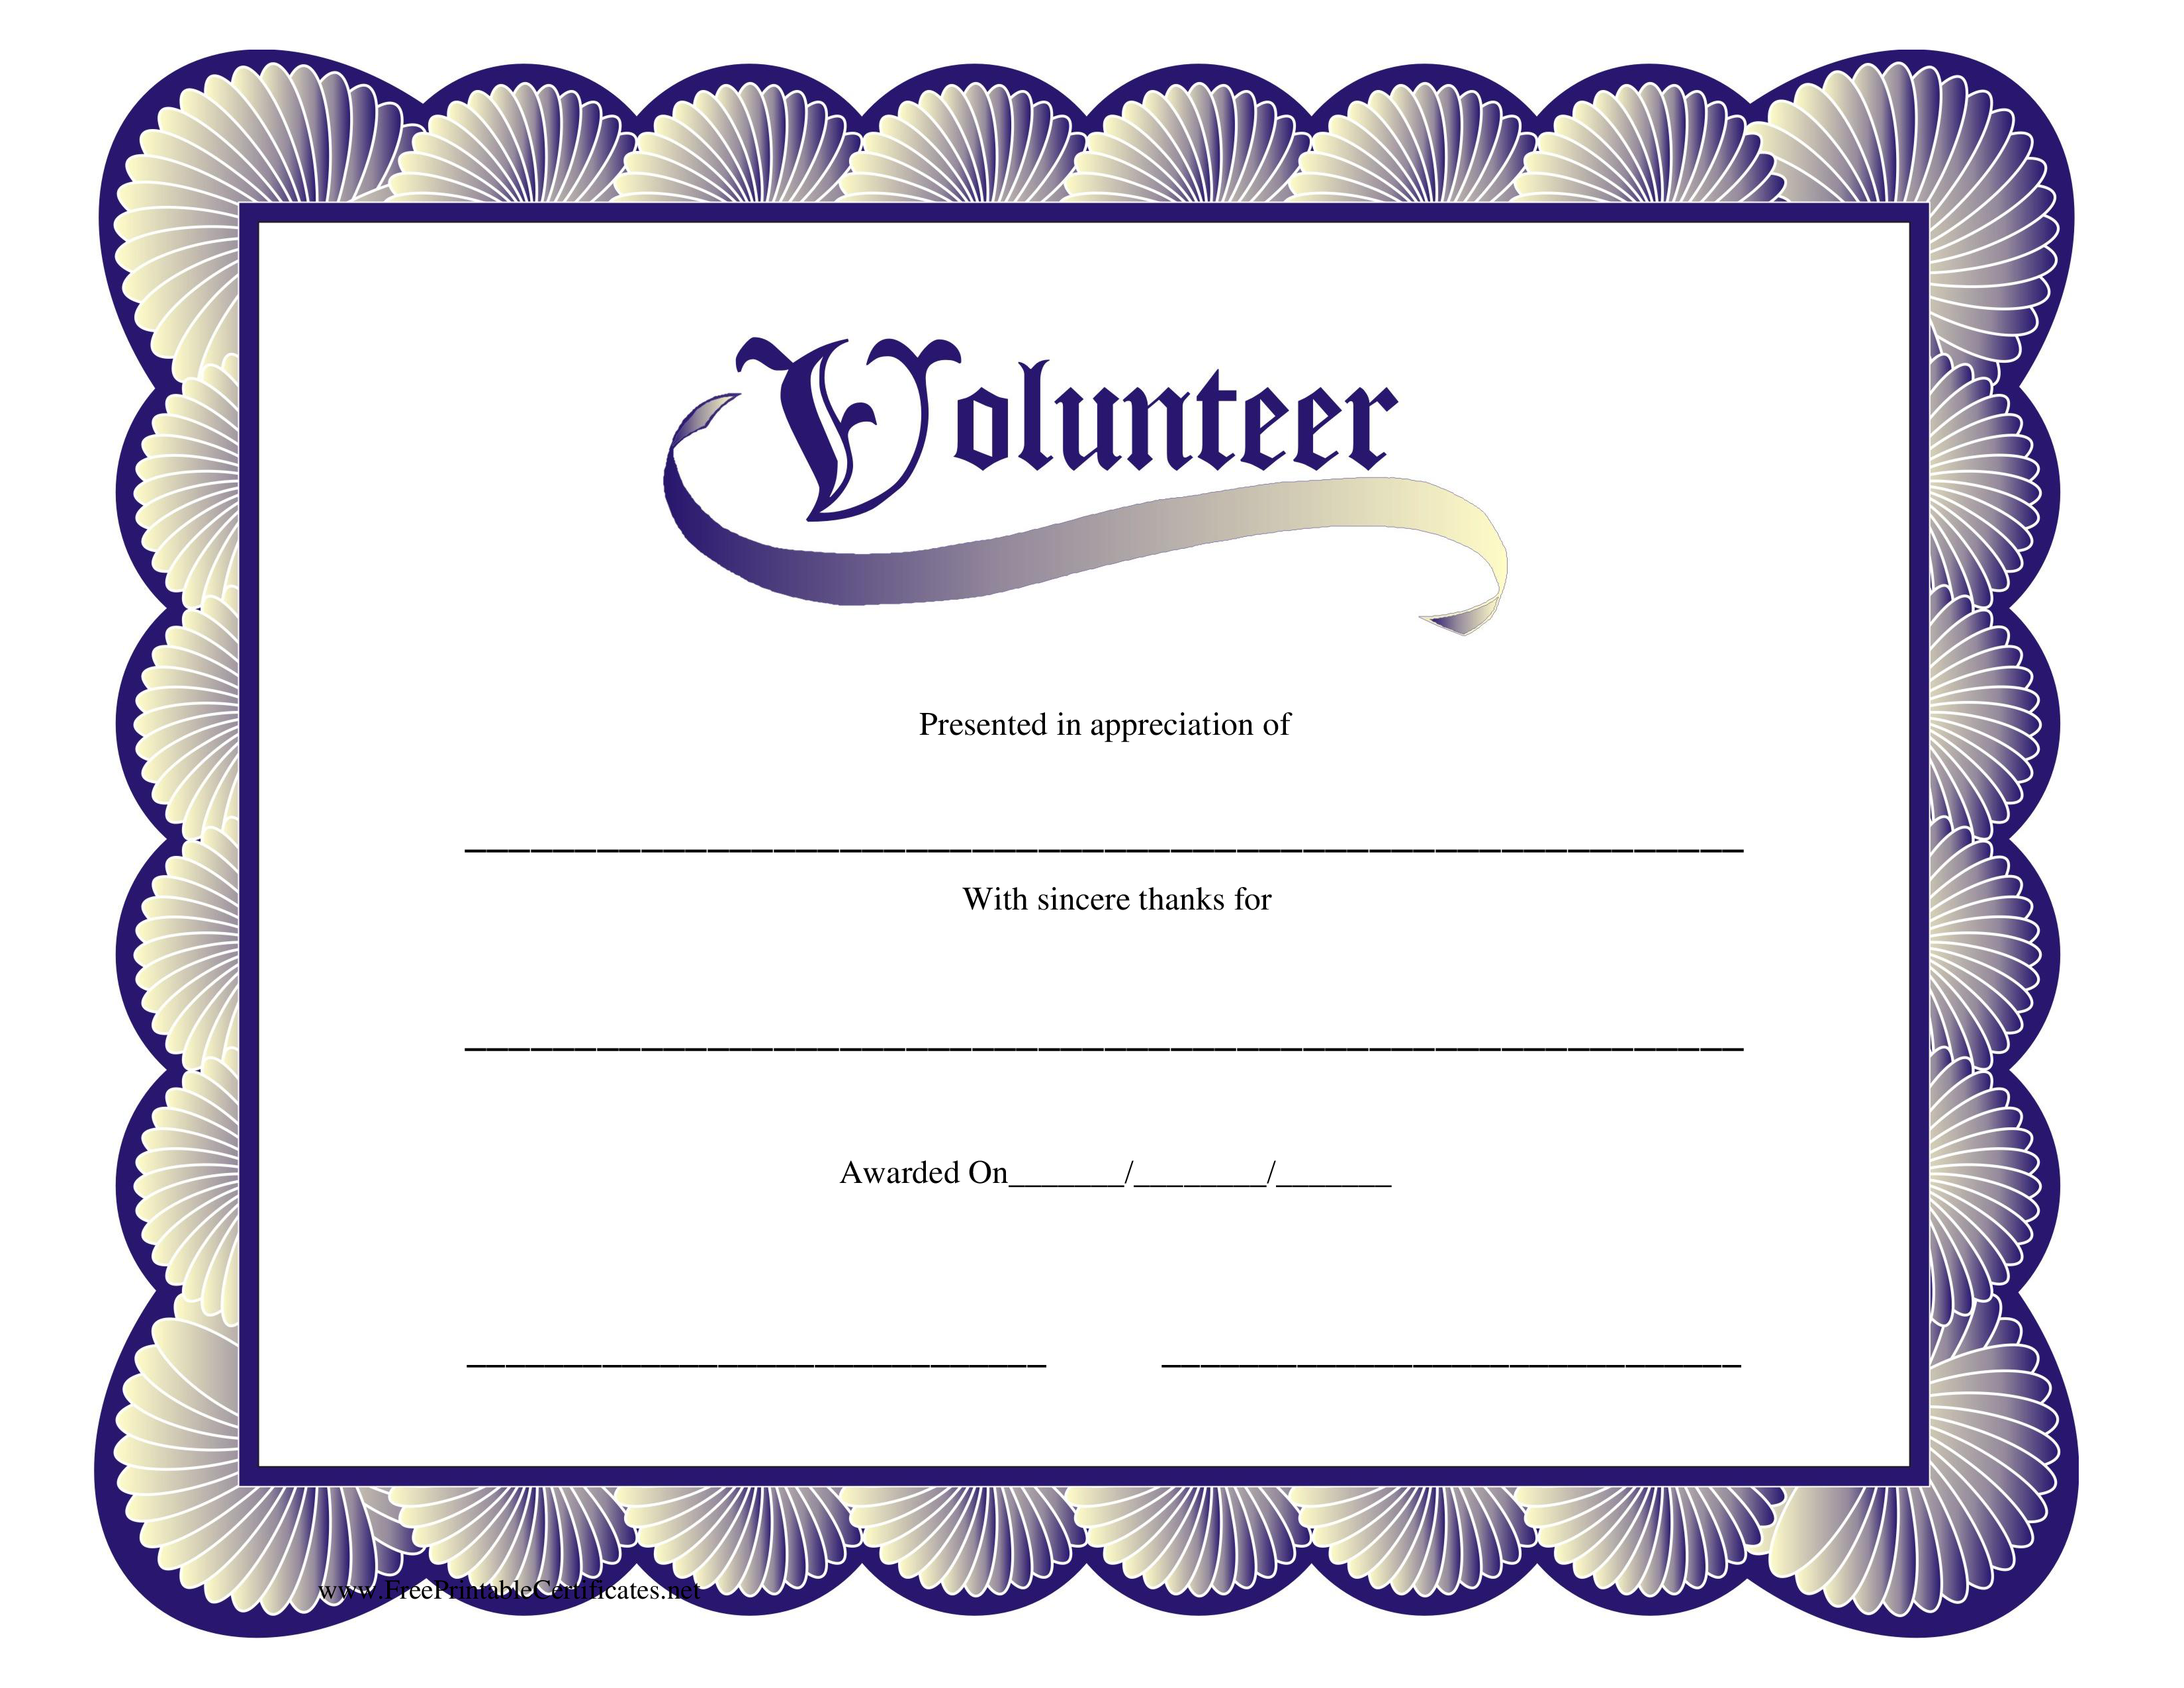 Volunteer Certificate main image